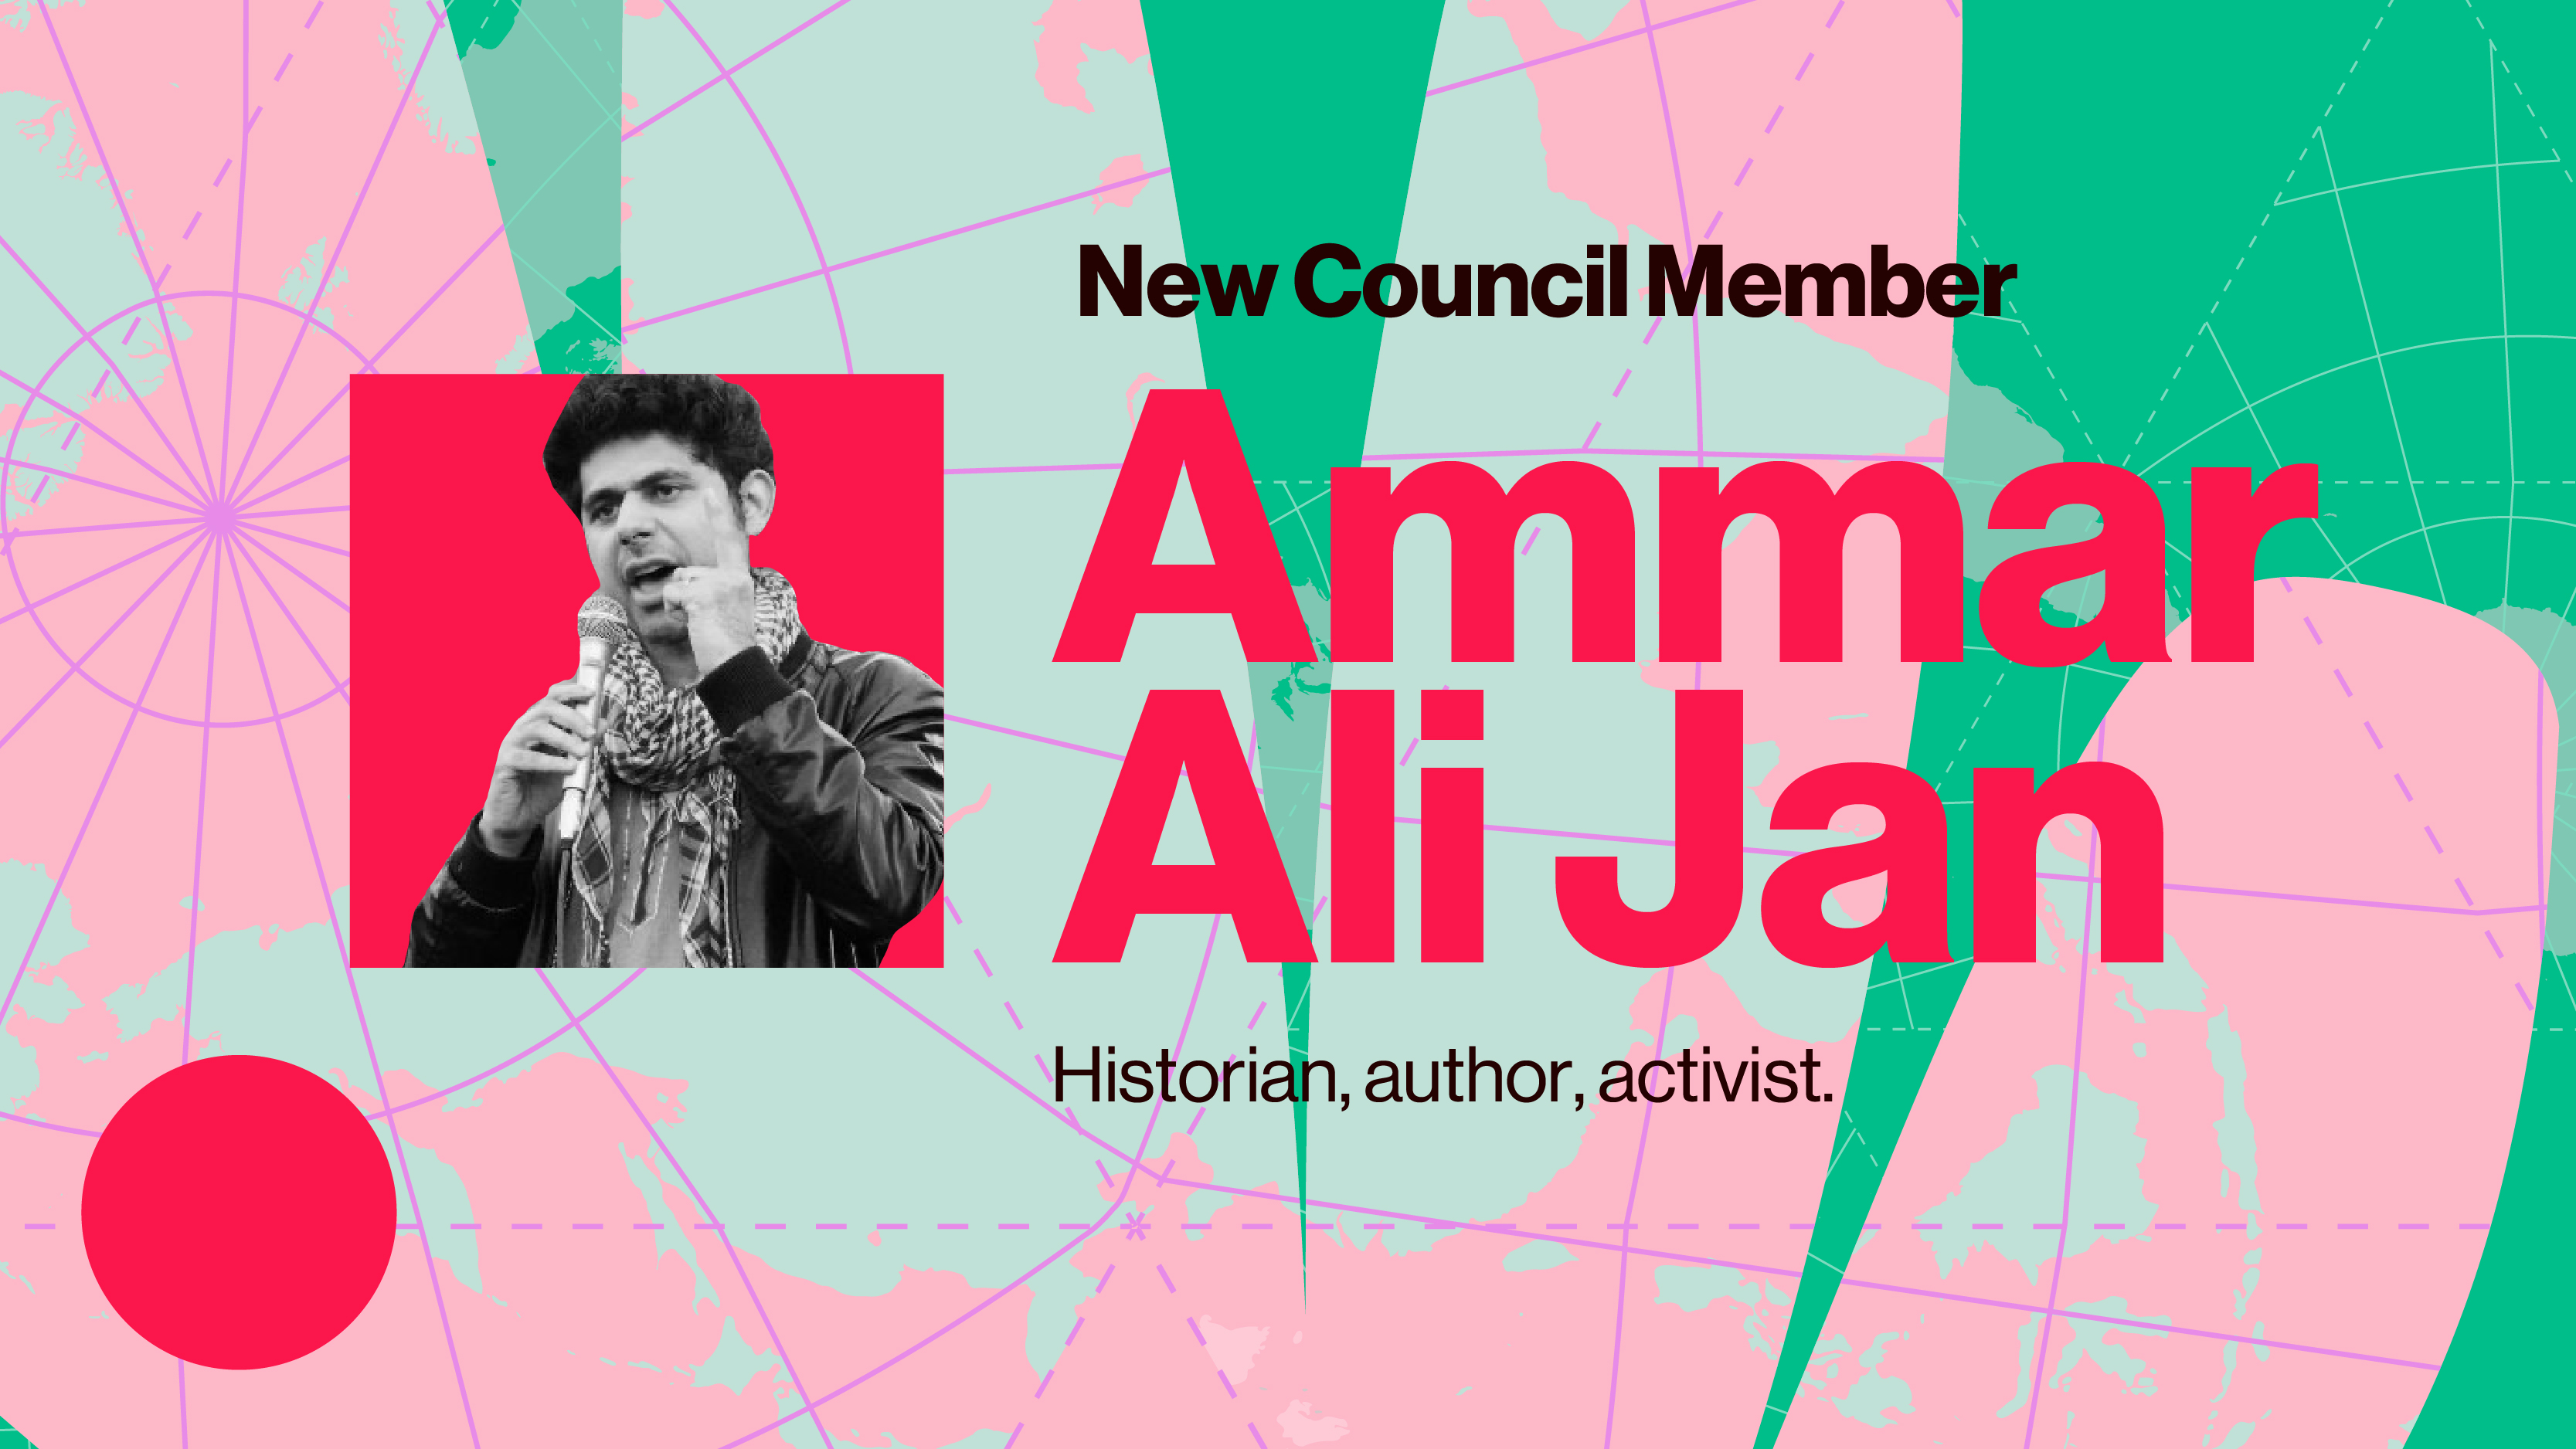 Progressive International on X: "7/ Ammar Ali Jan (@ammaralijan) a historian who works on Communist thought in the non-European world. He is a member of Haqooq-e-khalq Movement, an anti-capitalist organization that is